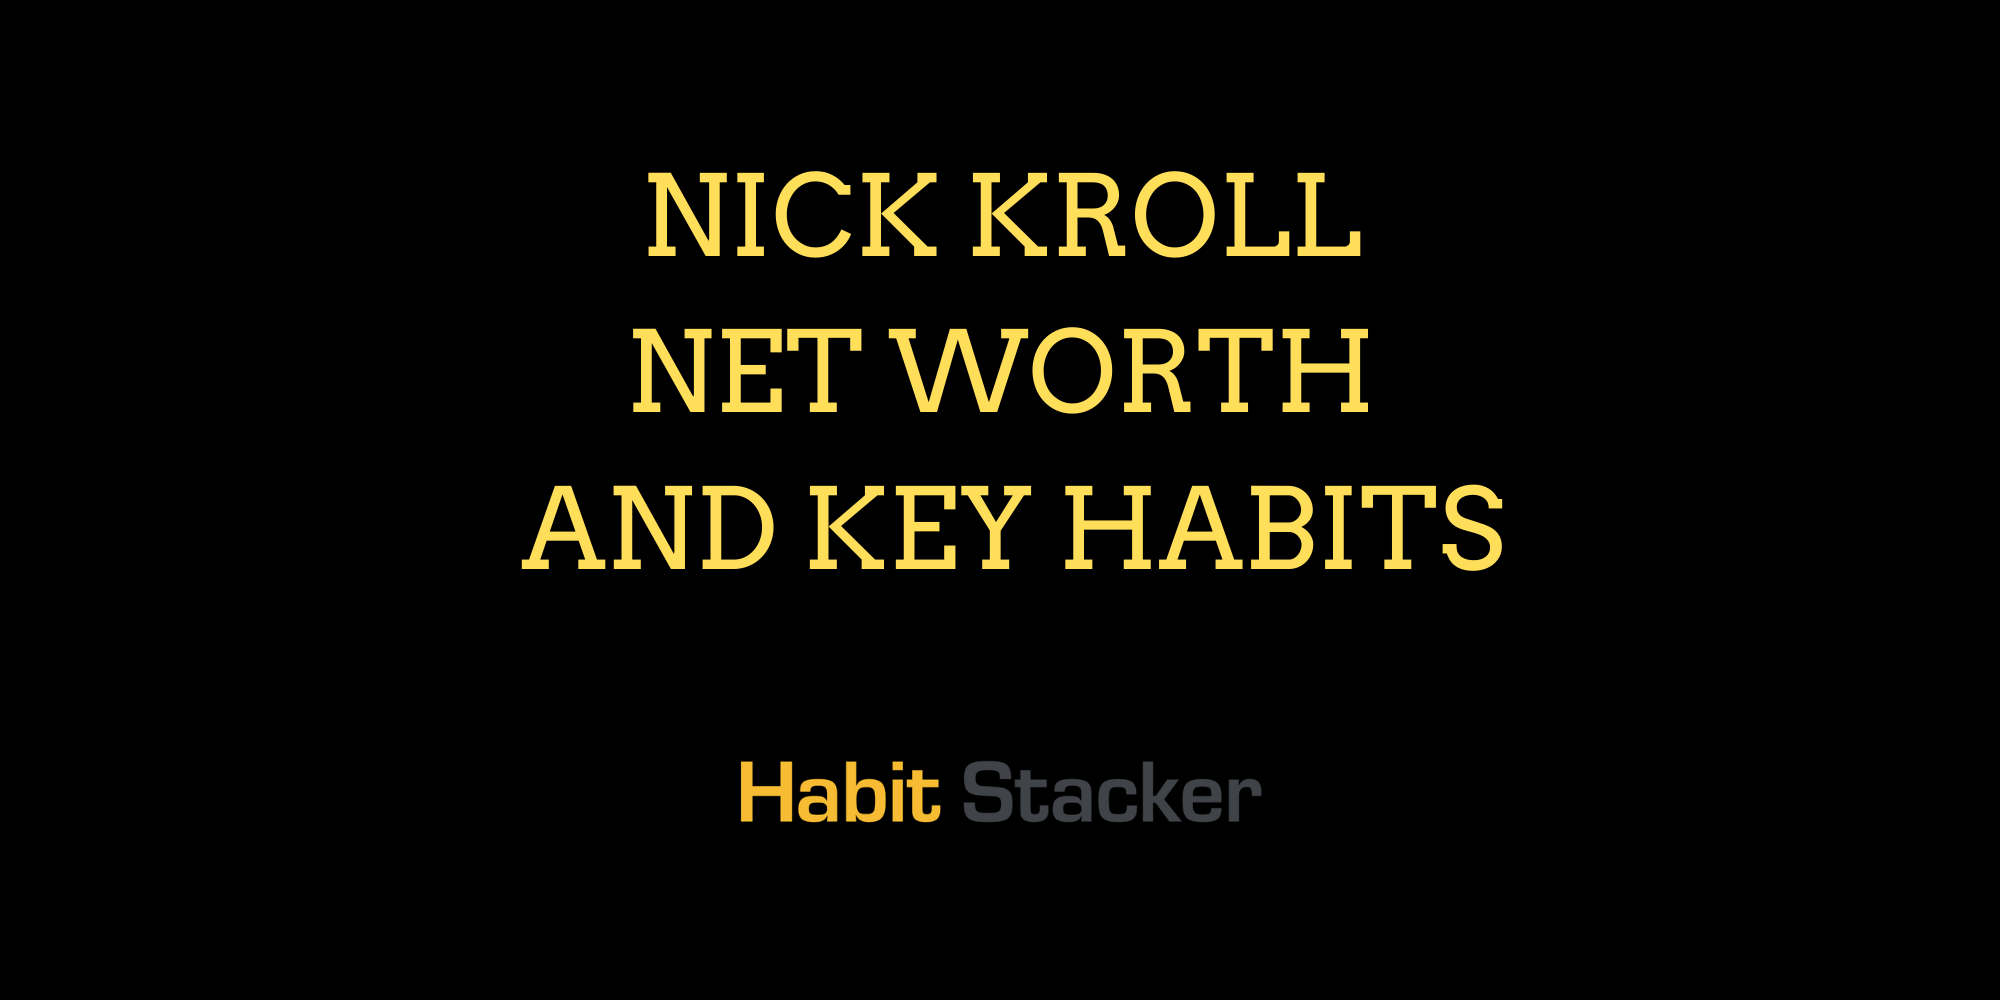 Nick Kroll Net Worth And Key Habits